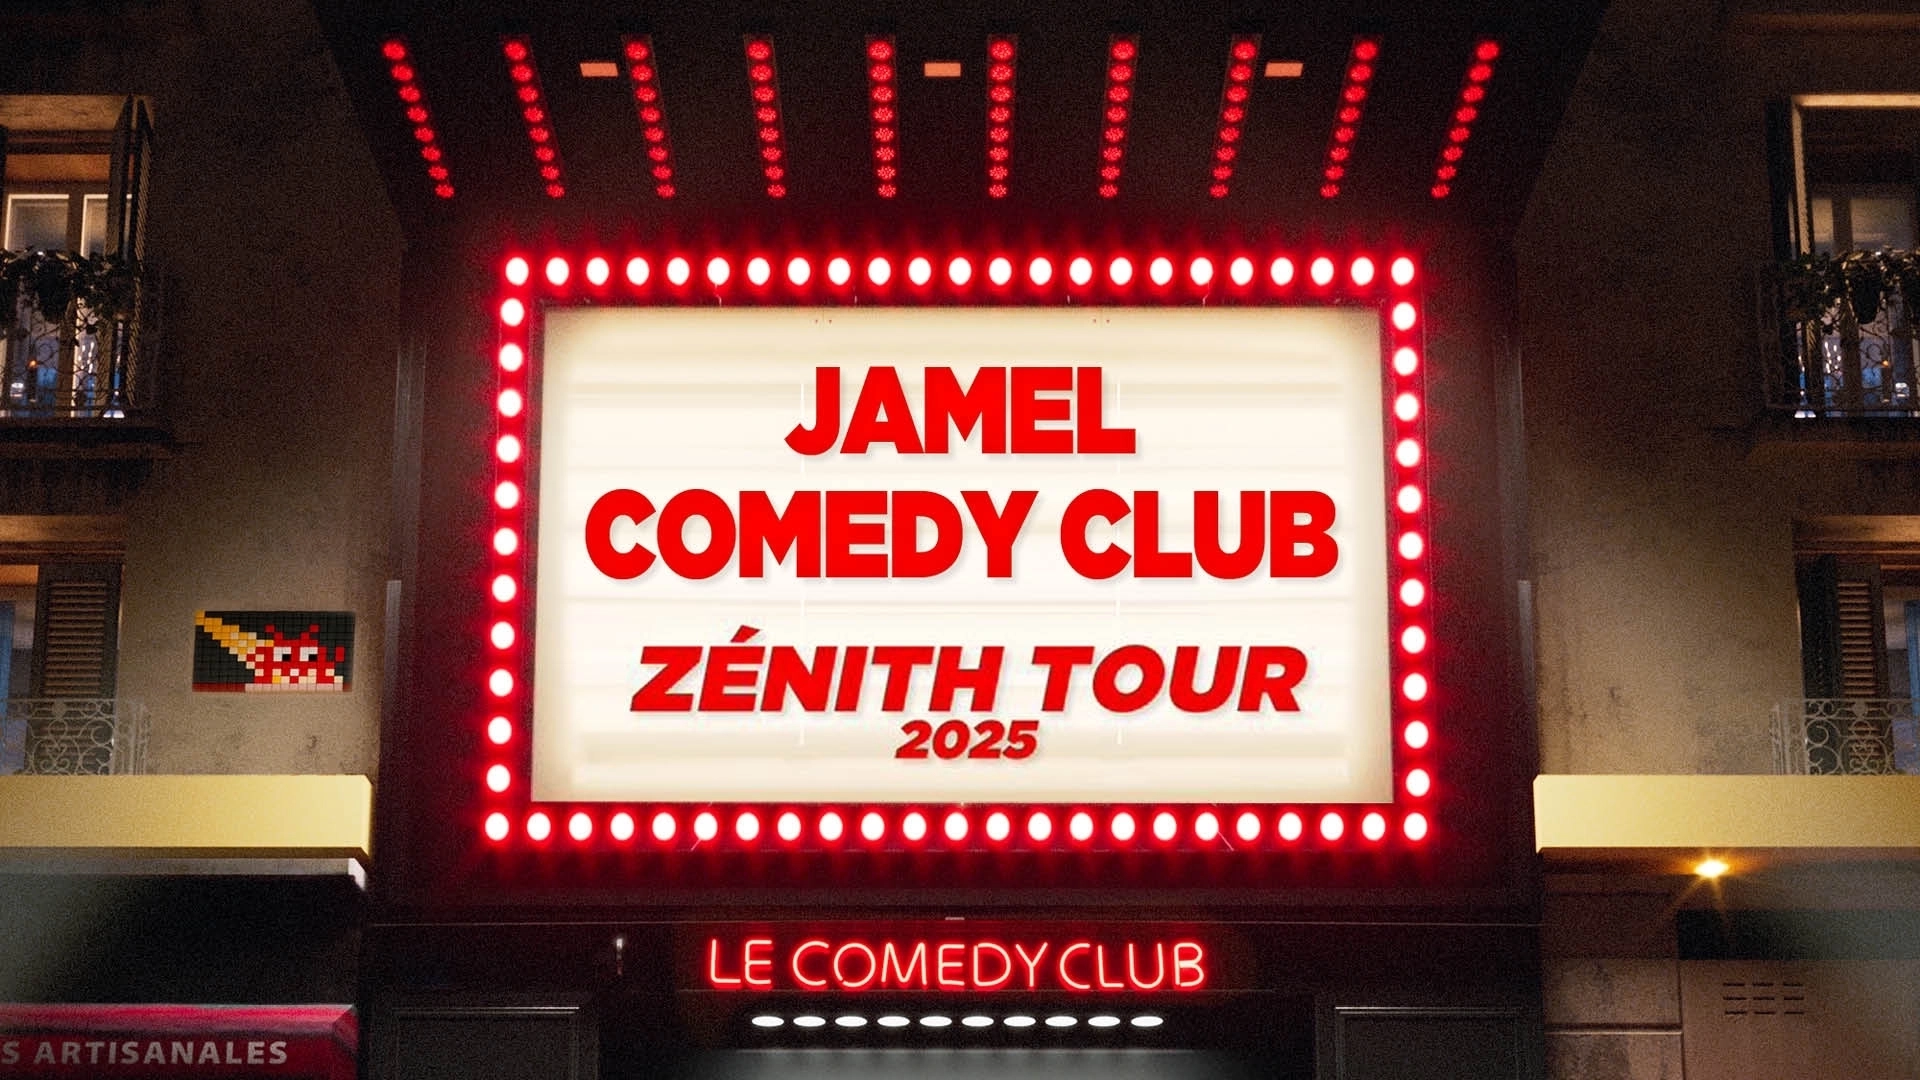 Jamel Comedy Club Zenith Tour 2025 at Halle Tony Garnier Tickets